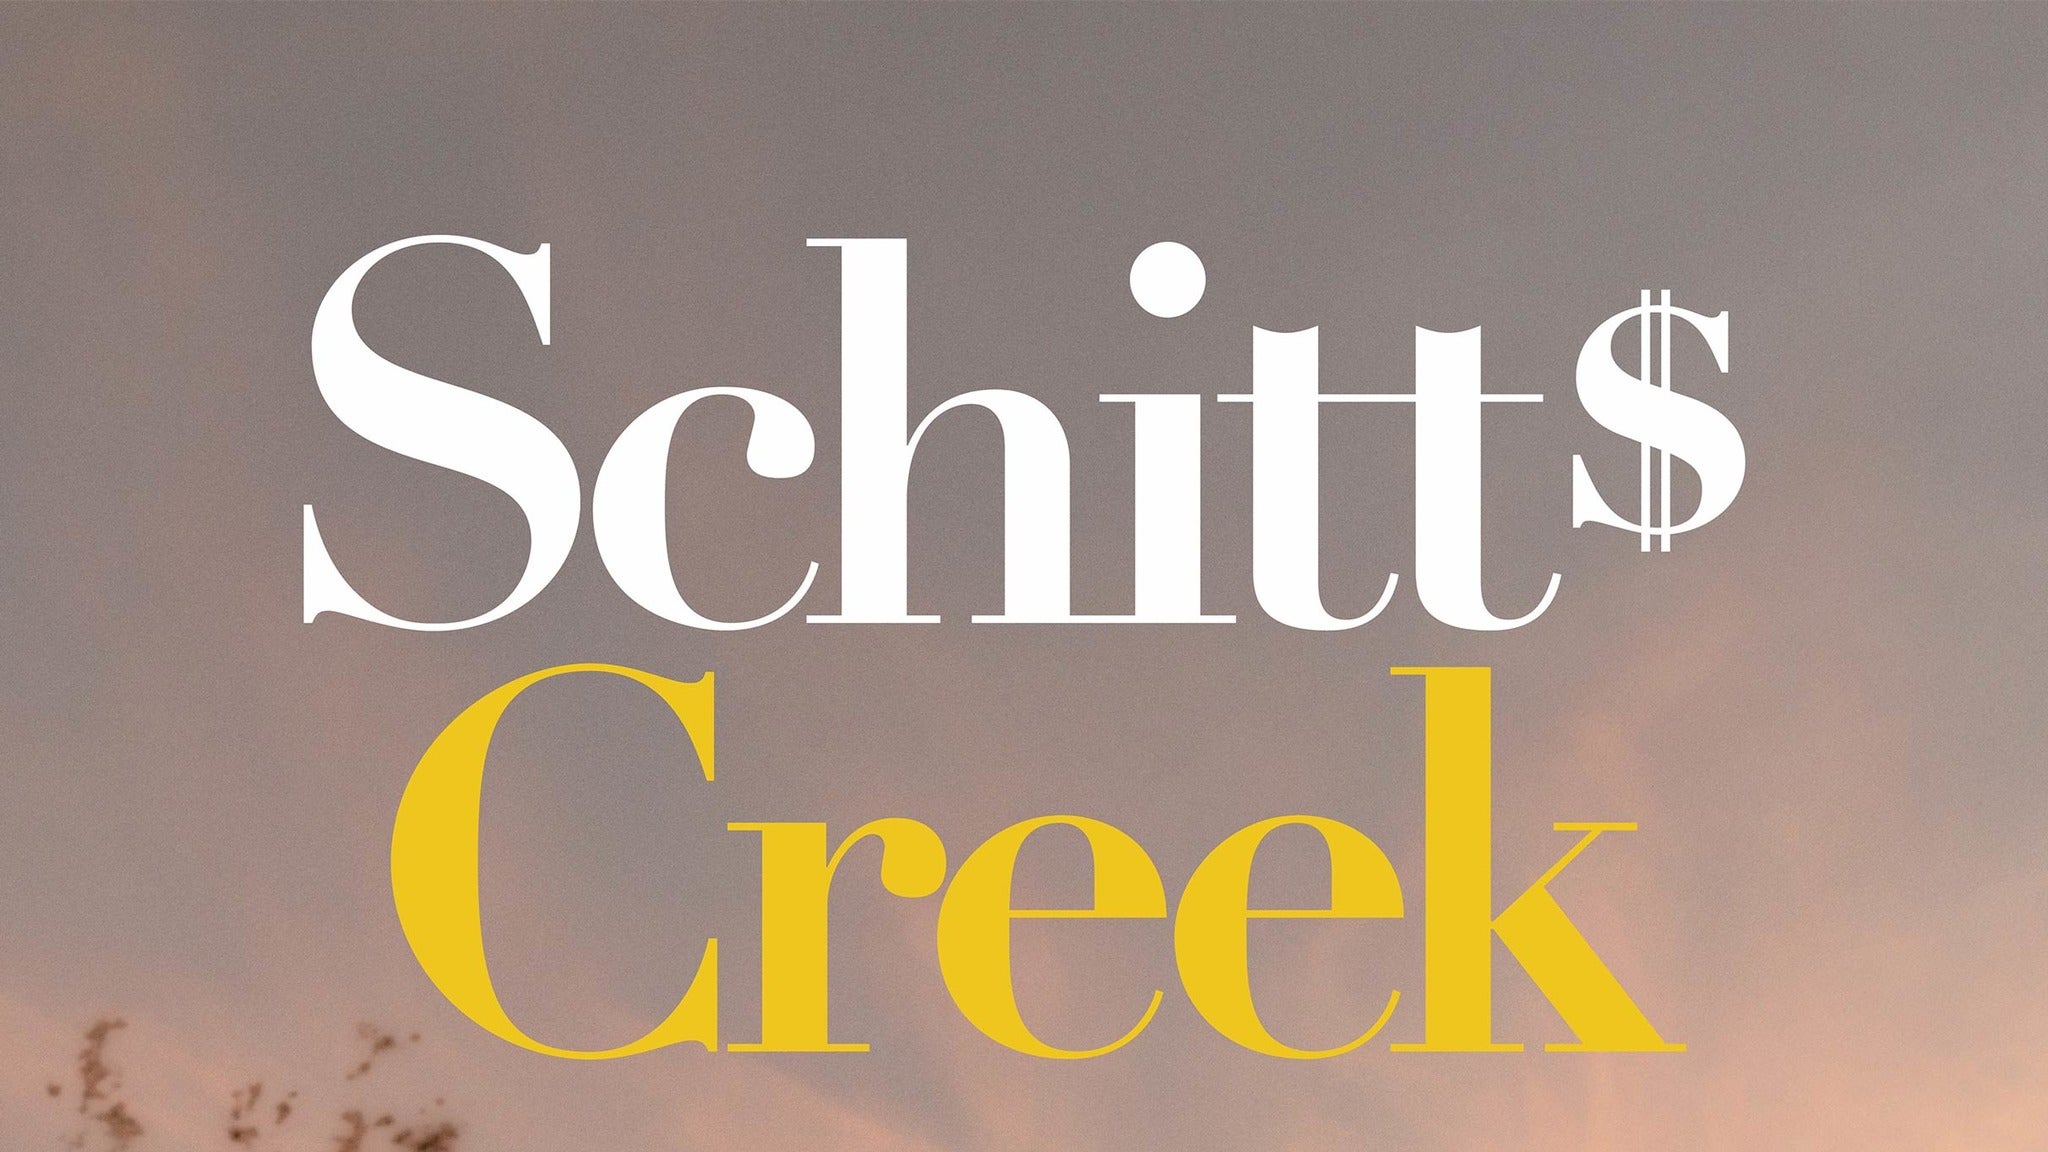 Schitt's Creek: The Farewell Tour in Uncasville promo photo for Official Platinum presale offer code